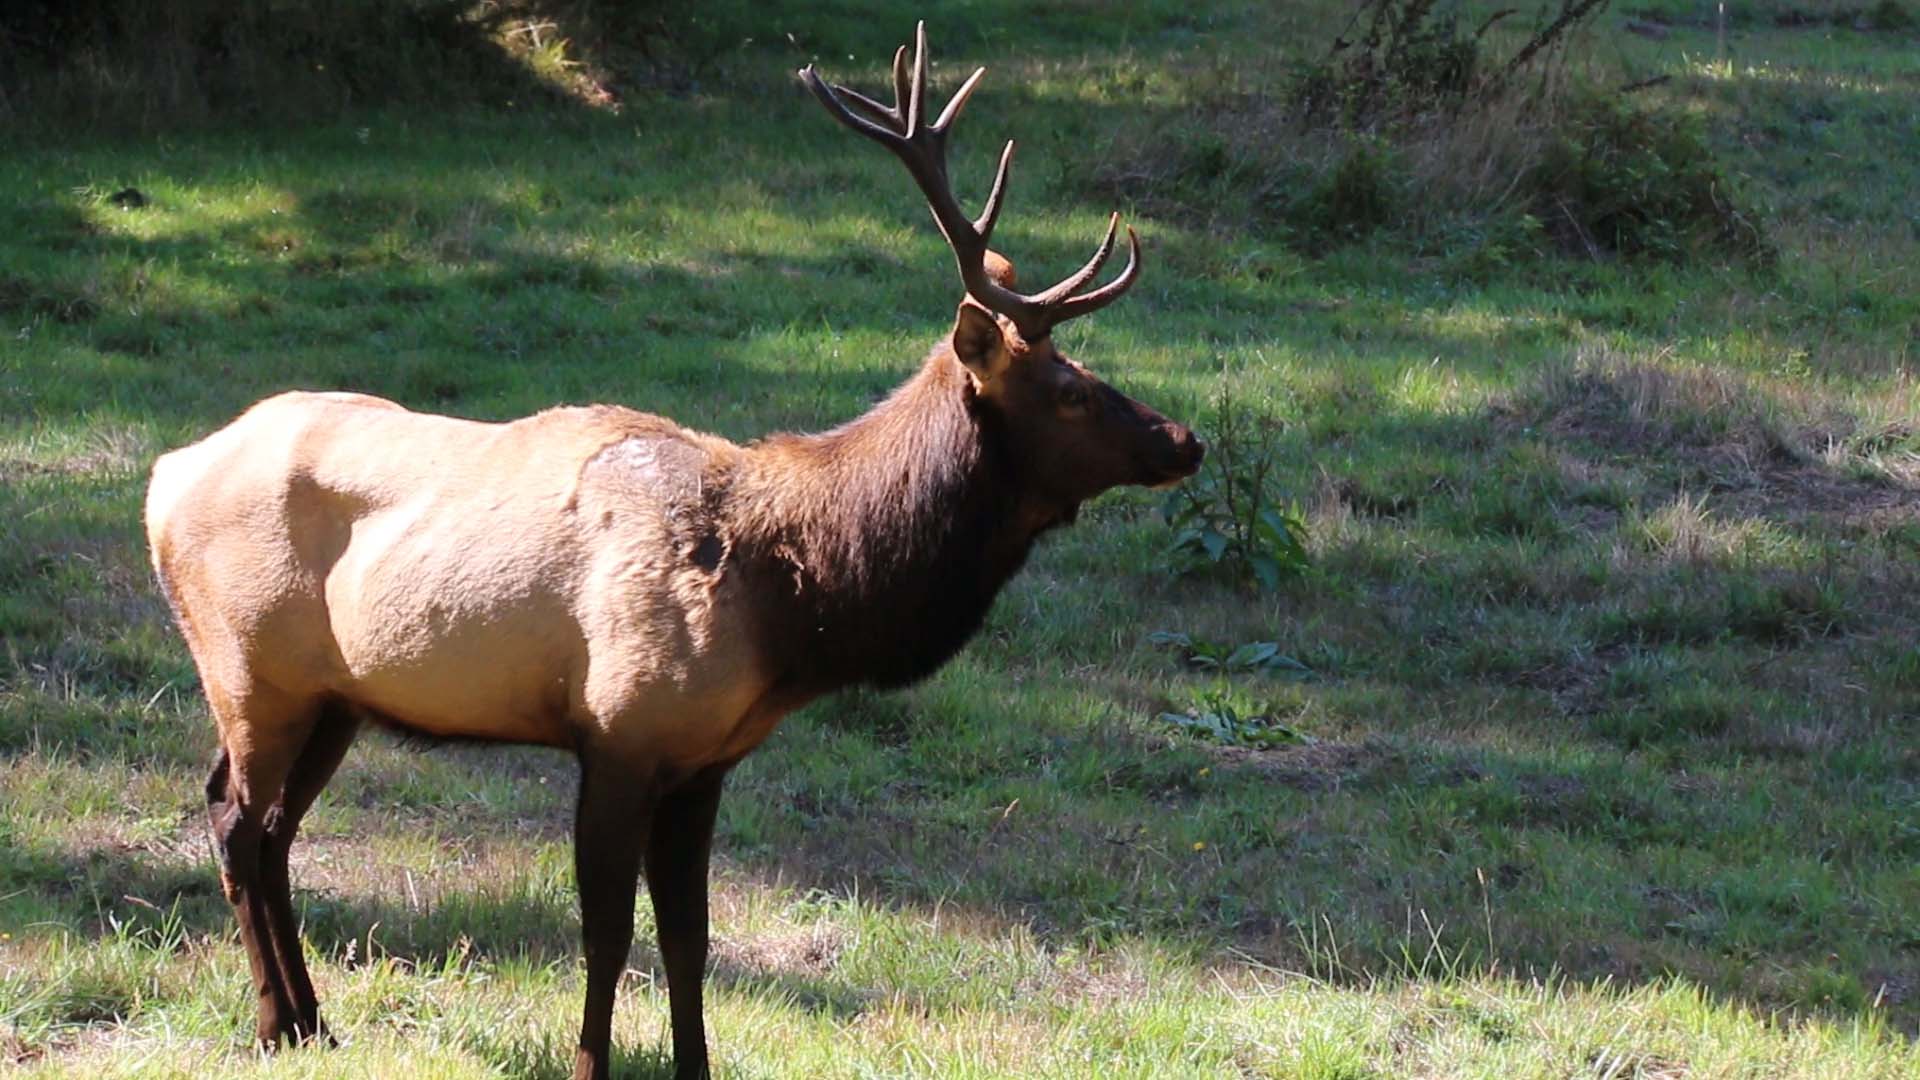 Bull elk at Grass Mountain, Sitka Center for Art & Ecology, USA